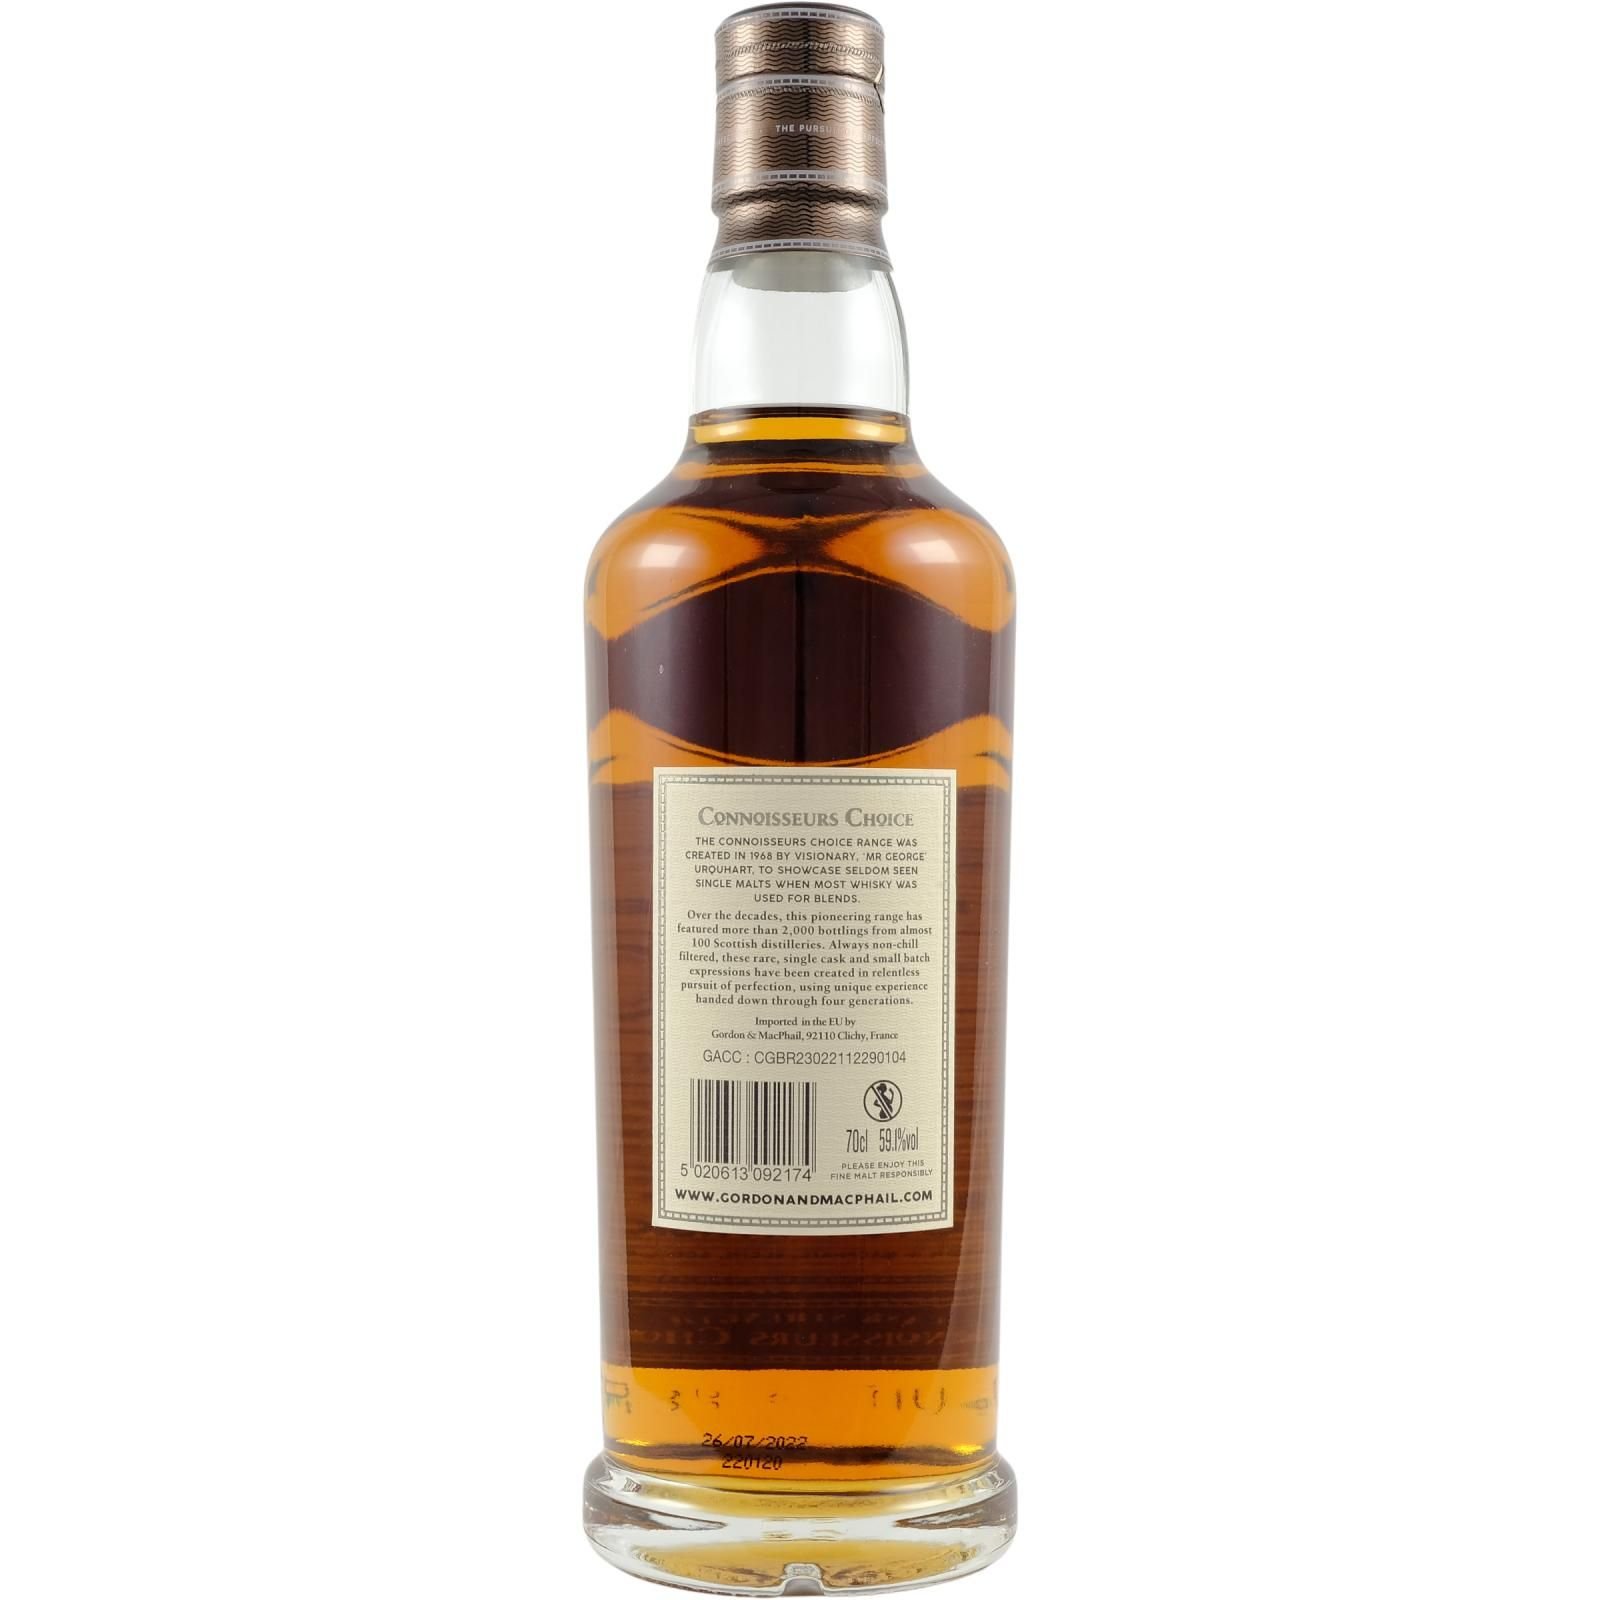 Віскі Gordon & MacPhail Tormore Connoisseurs Choice 2000 Single Malt Scotch Whisky 59.1% 0.7 л, у подарунковій упаковці - фото 3